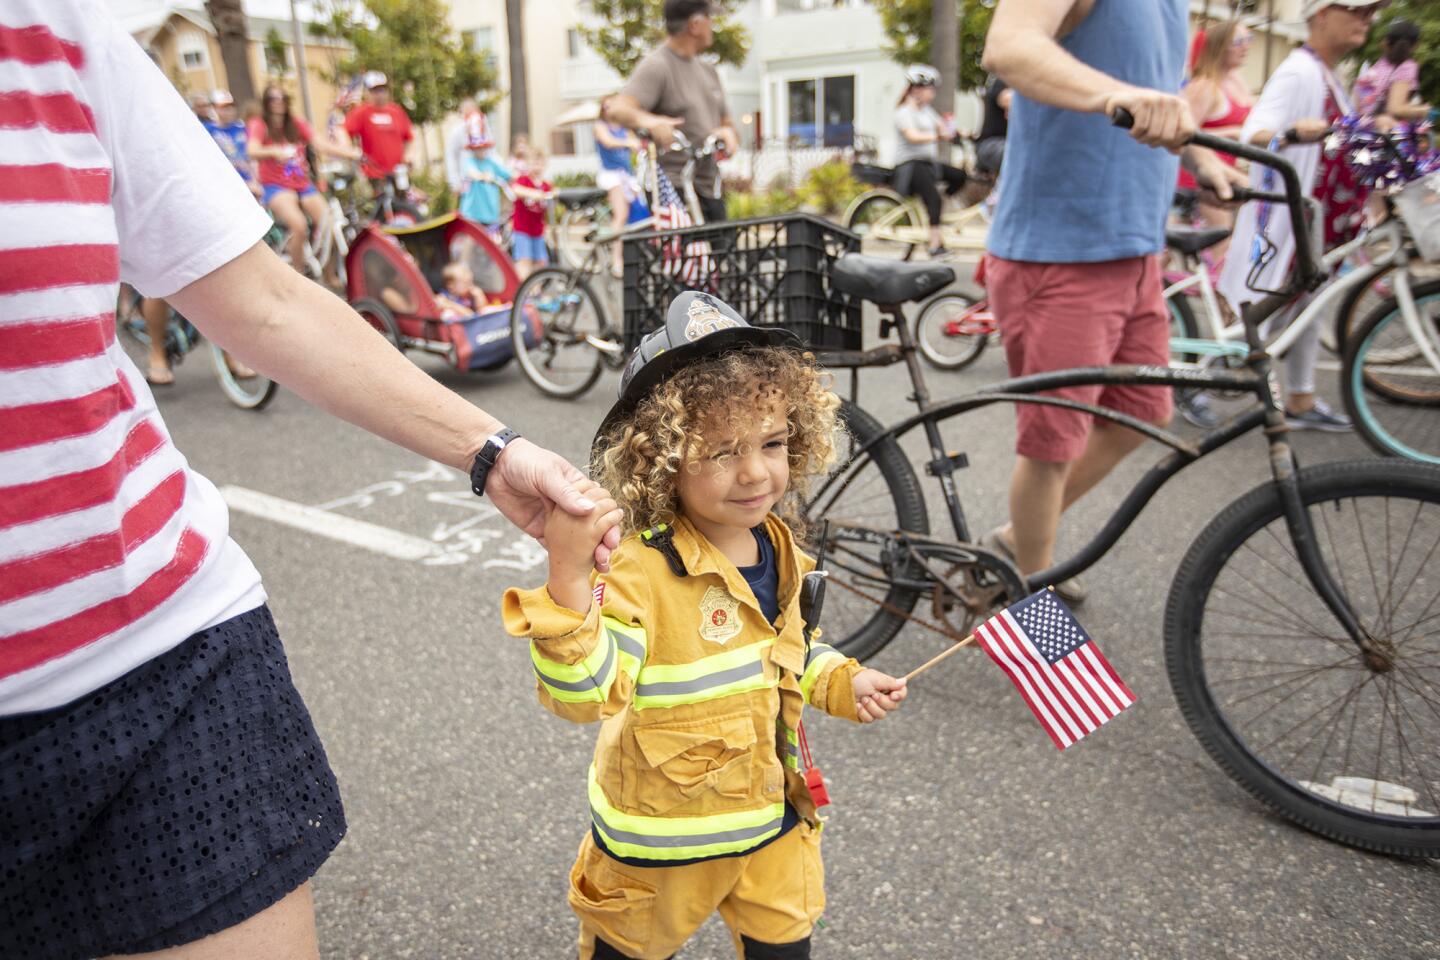 Photo Gallery: The annual Newport Peninsula Bike Parade and Community Festival